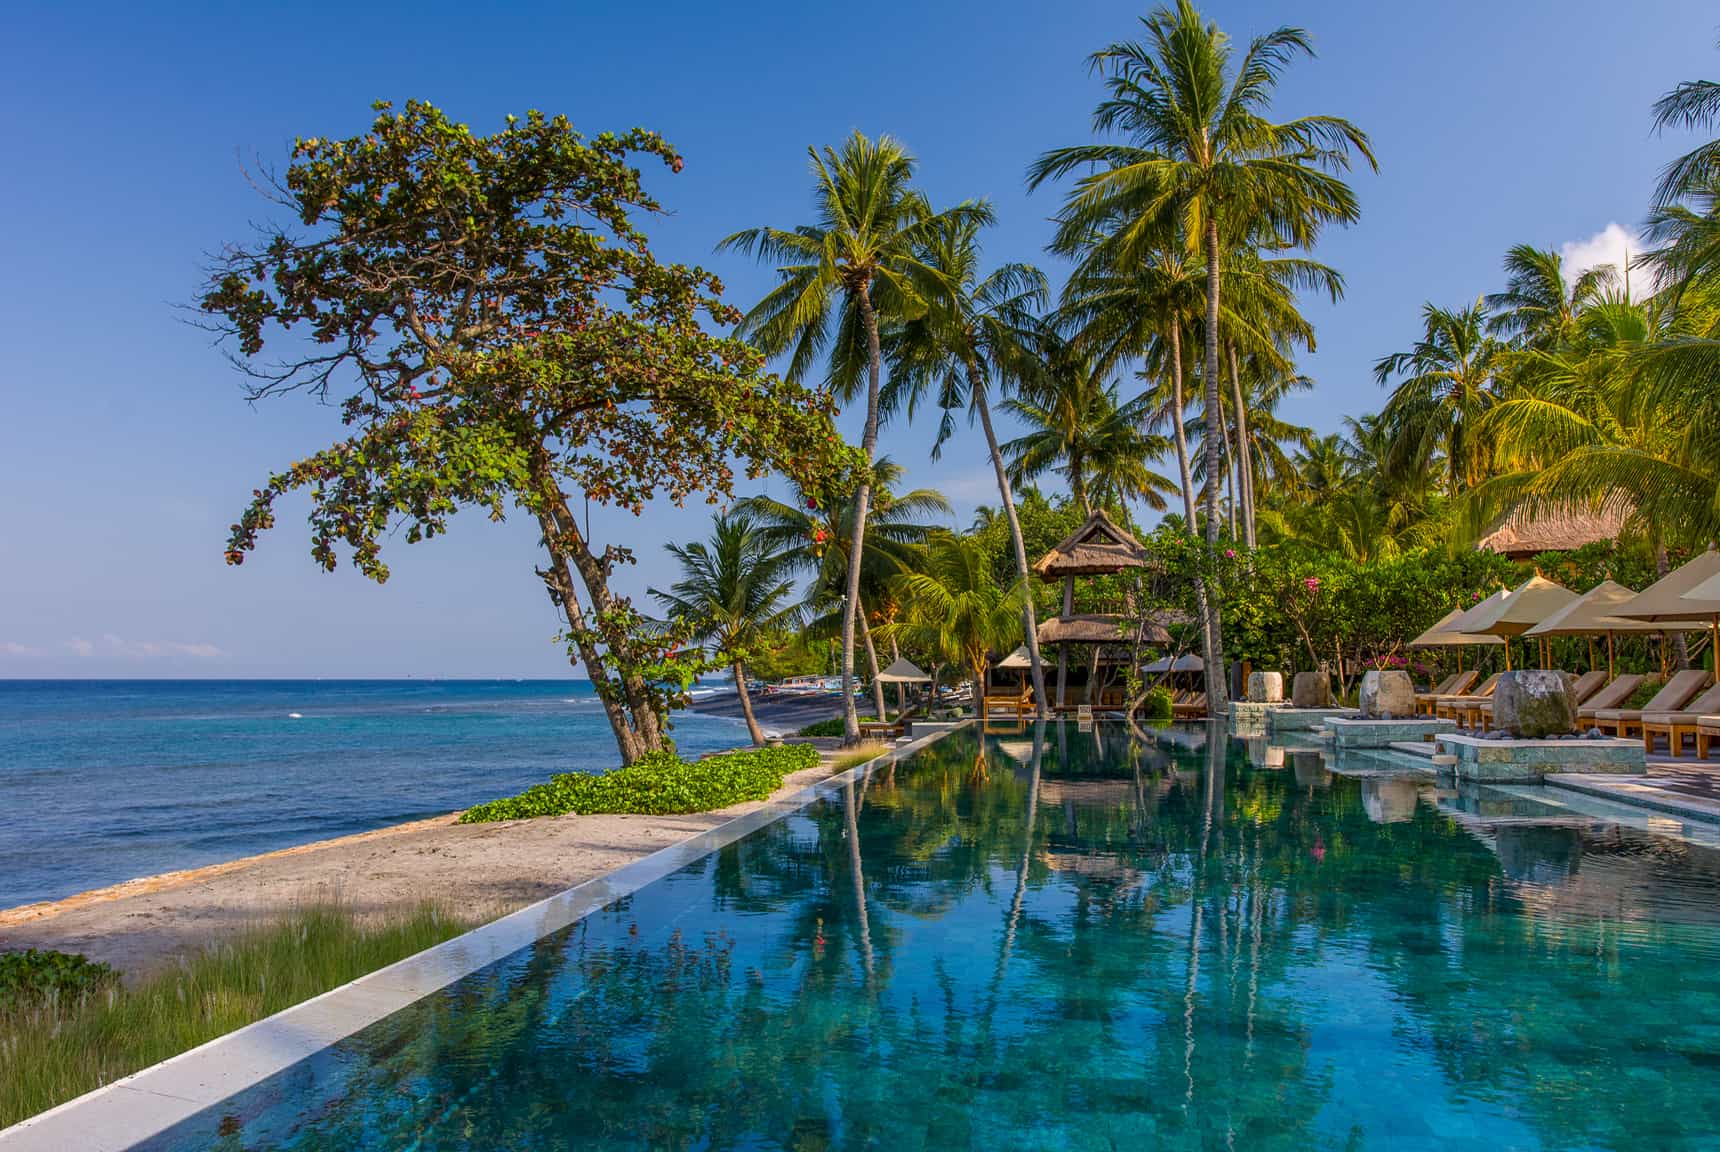 Qunci Villas - Mangsit, Lombok Indonesia (Bali hotel photography by master photographer Rick Carmichael of LuxViz)